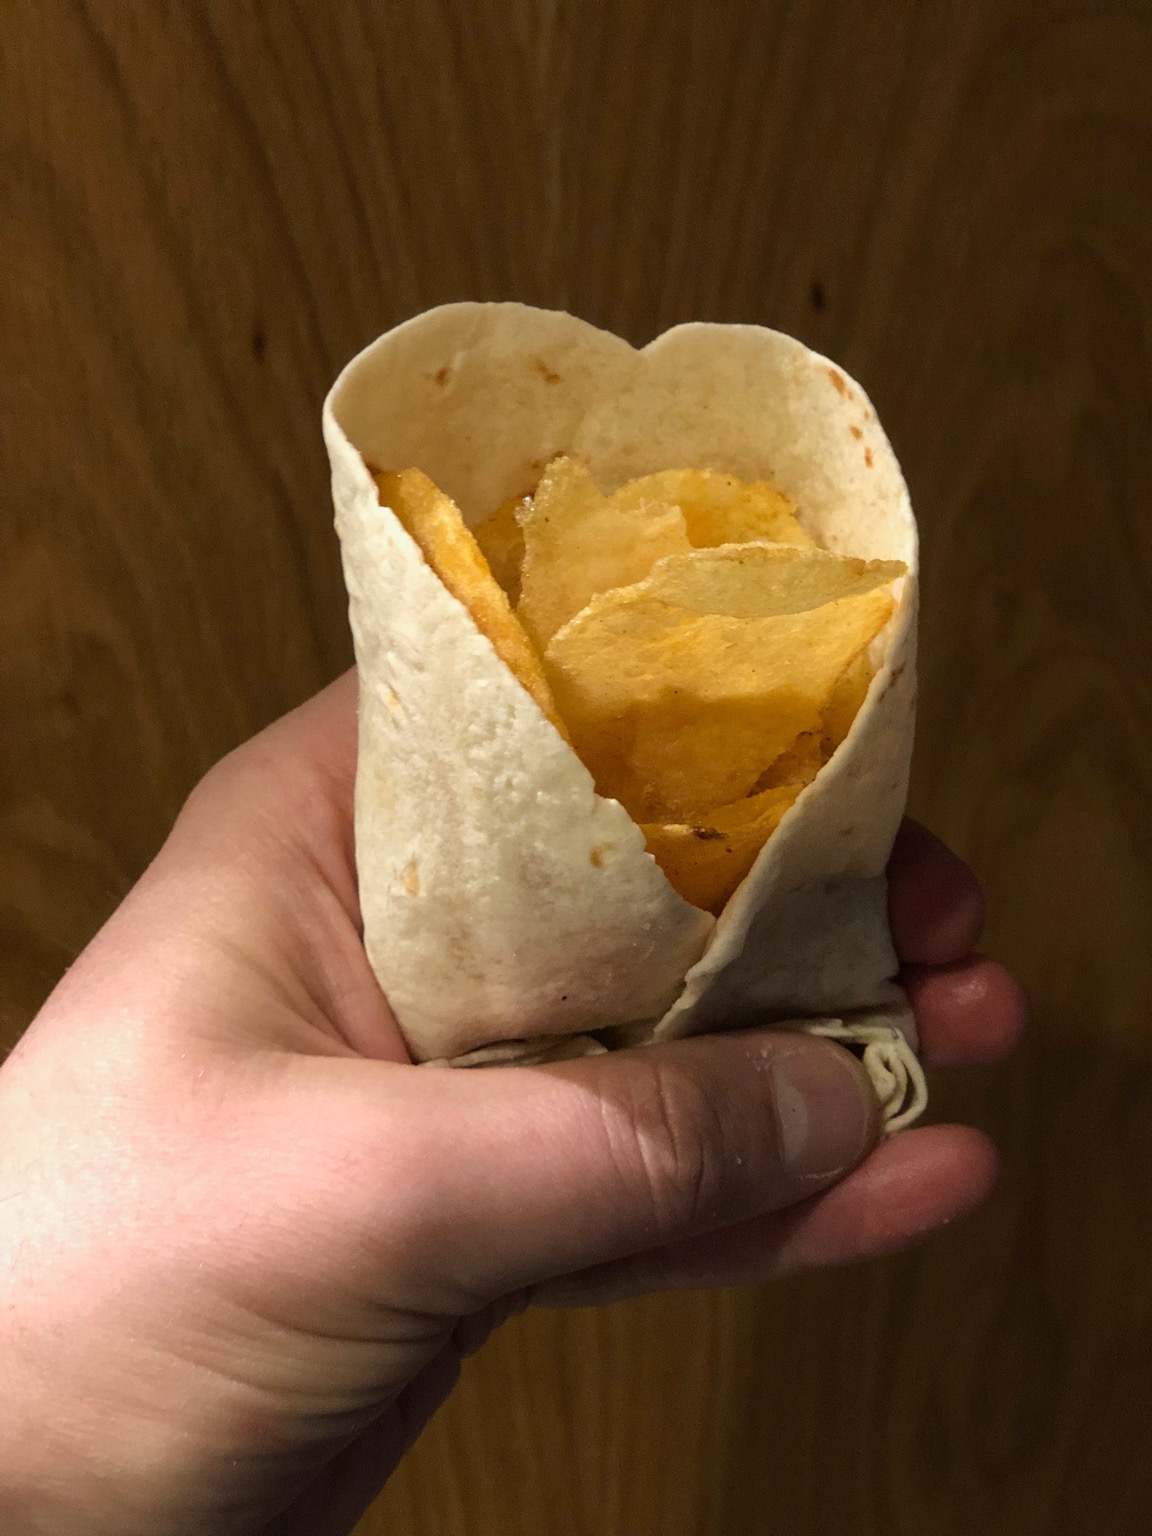 Potato crisps held in a tortilla wrap